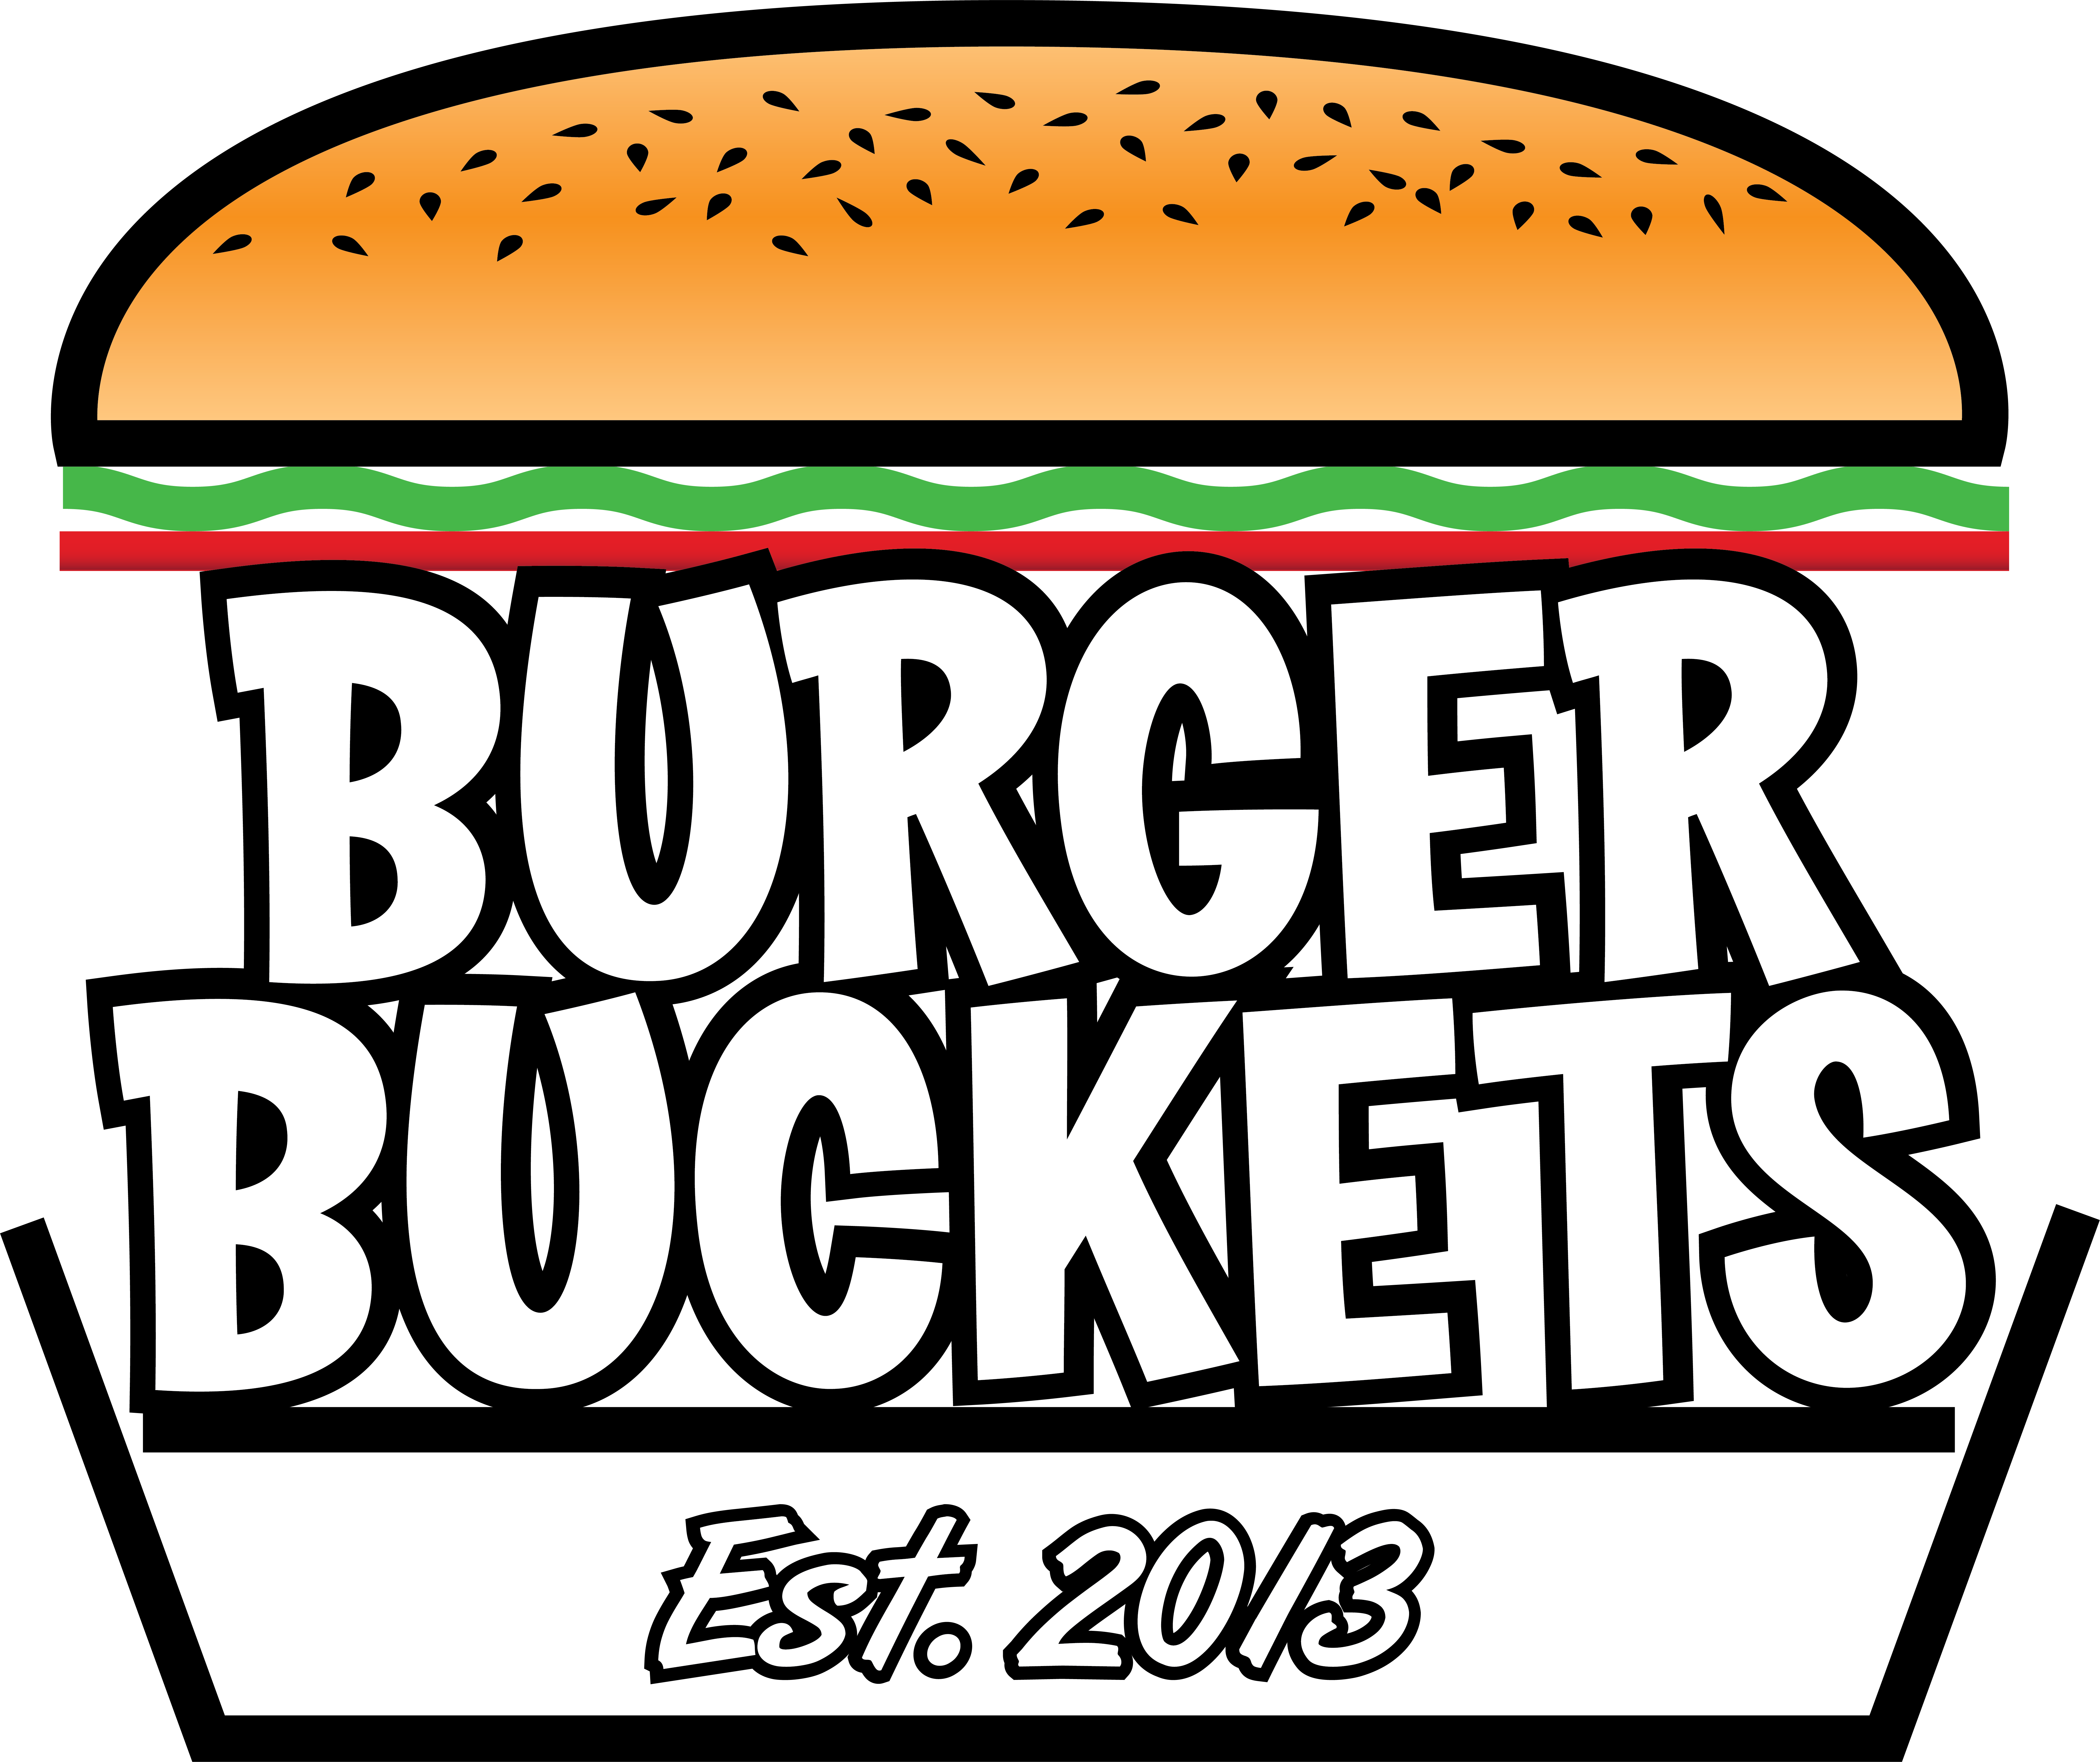 Burger Buckets Franchise